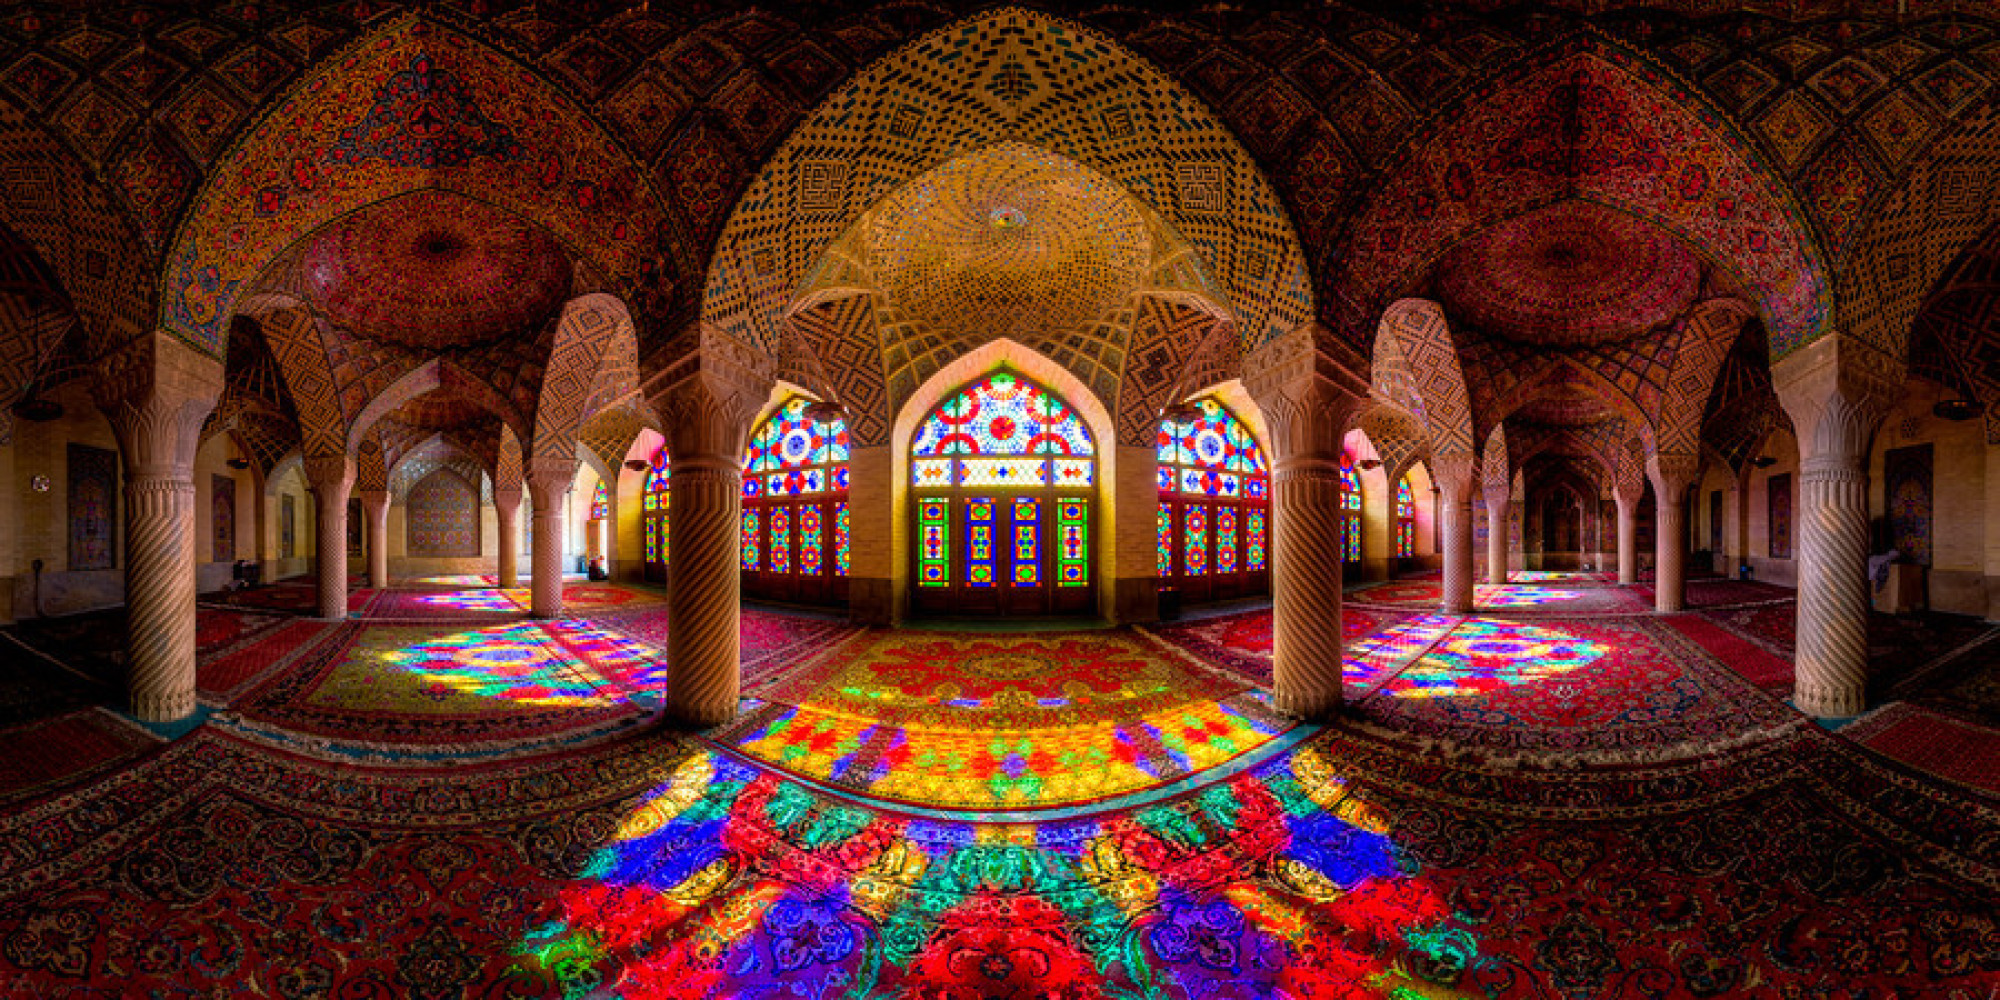 عنصر معماری ایرانی